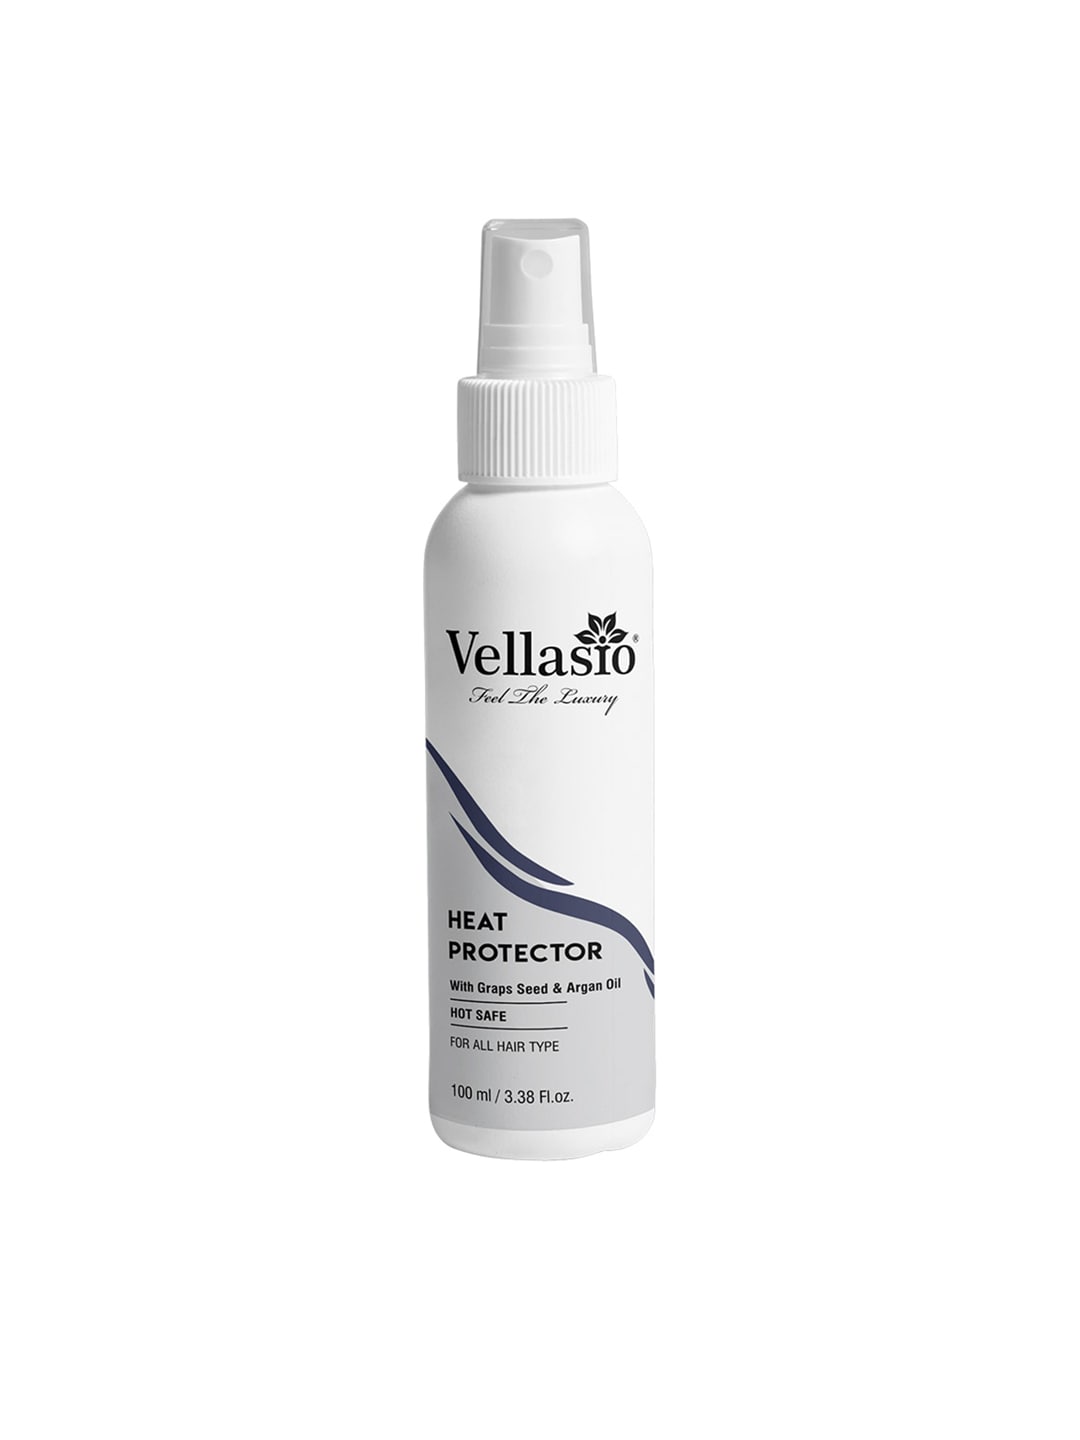 Vellasio Grape Seed & Argan Oil Heat Protector Hair Spray - 100 ml Price in India